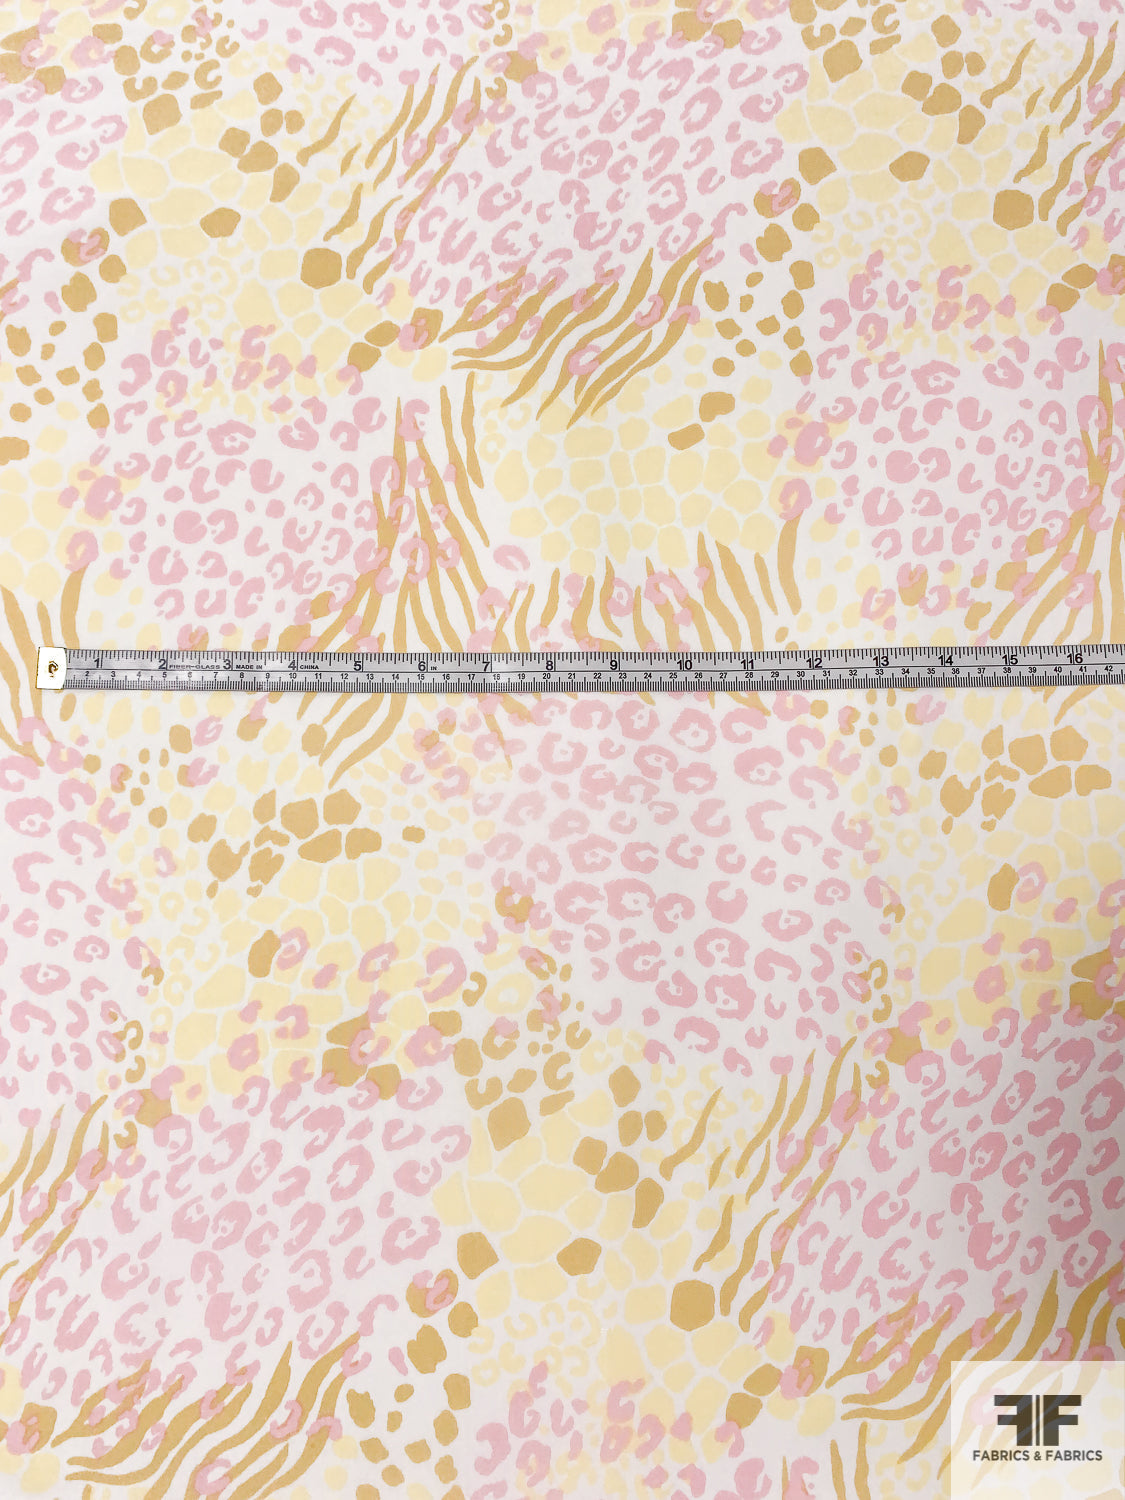 Wavy Animal Pattern Collage Printed Silk Crepe de Chine - Baby Pink / Baby Yellow / Light Ochre